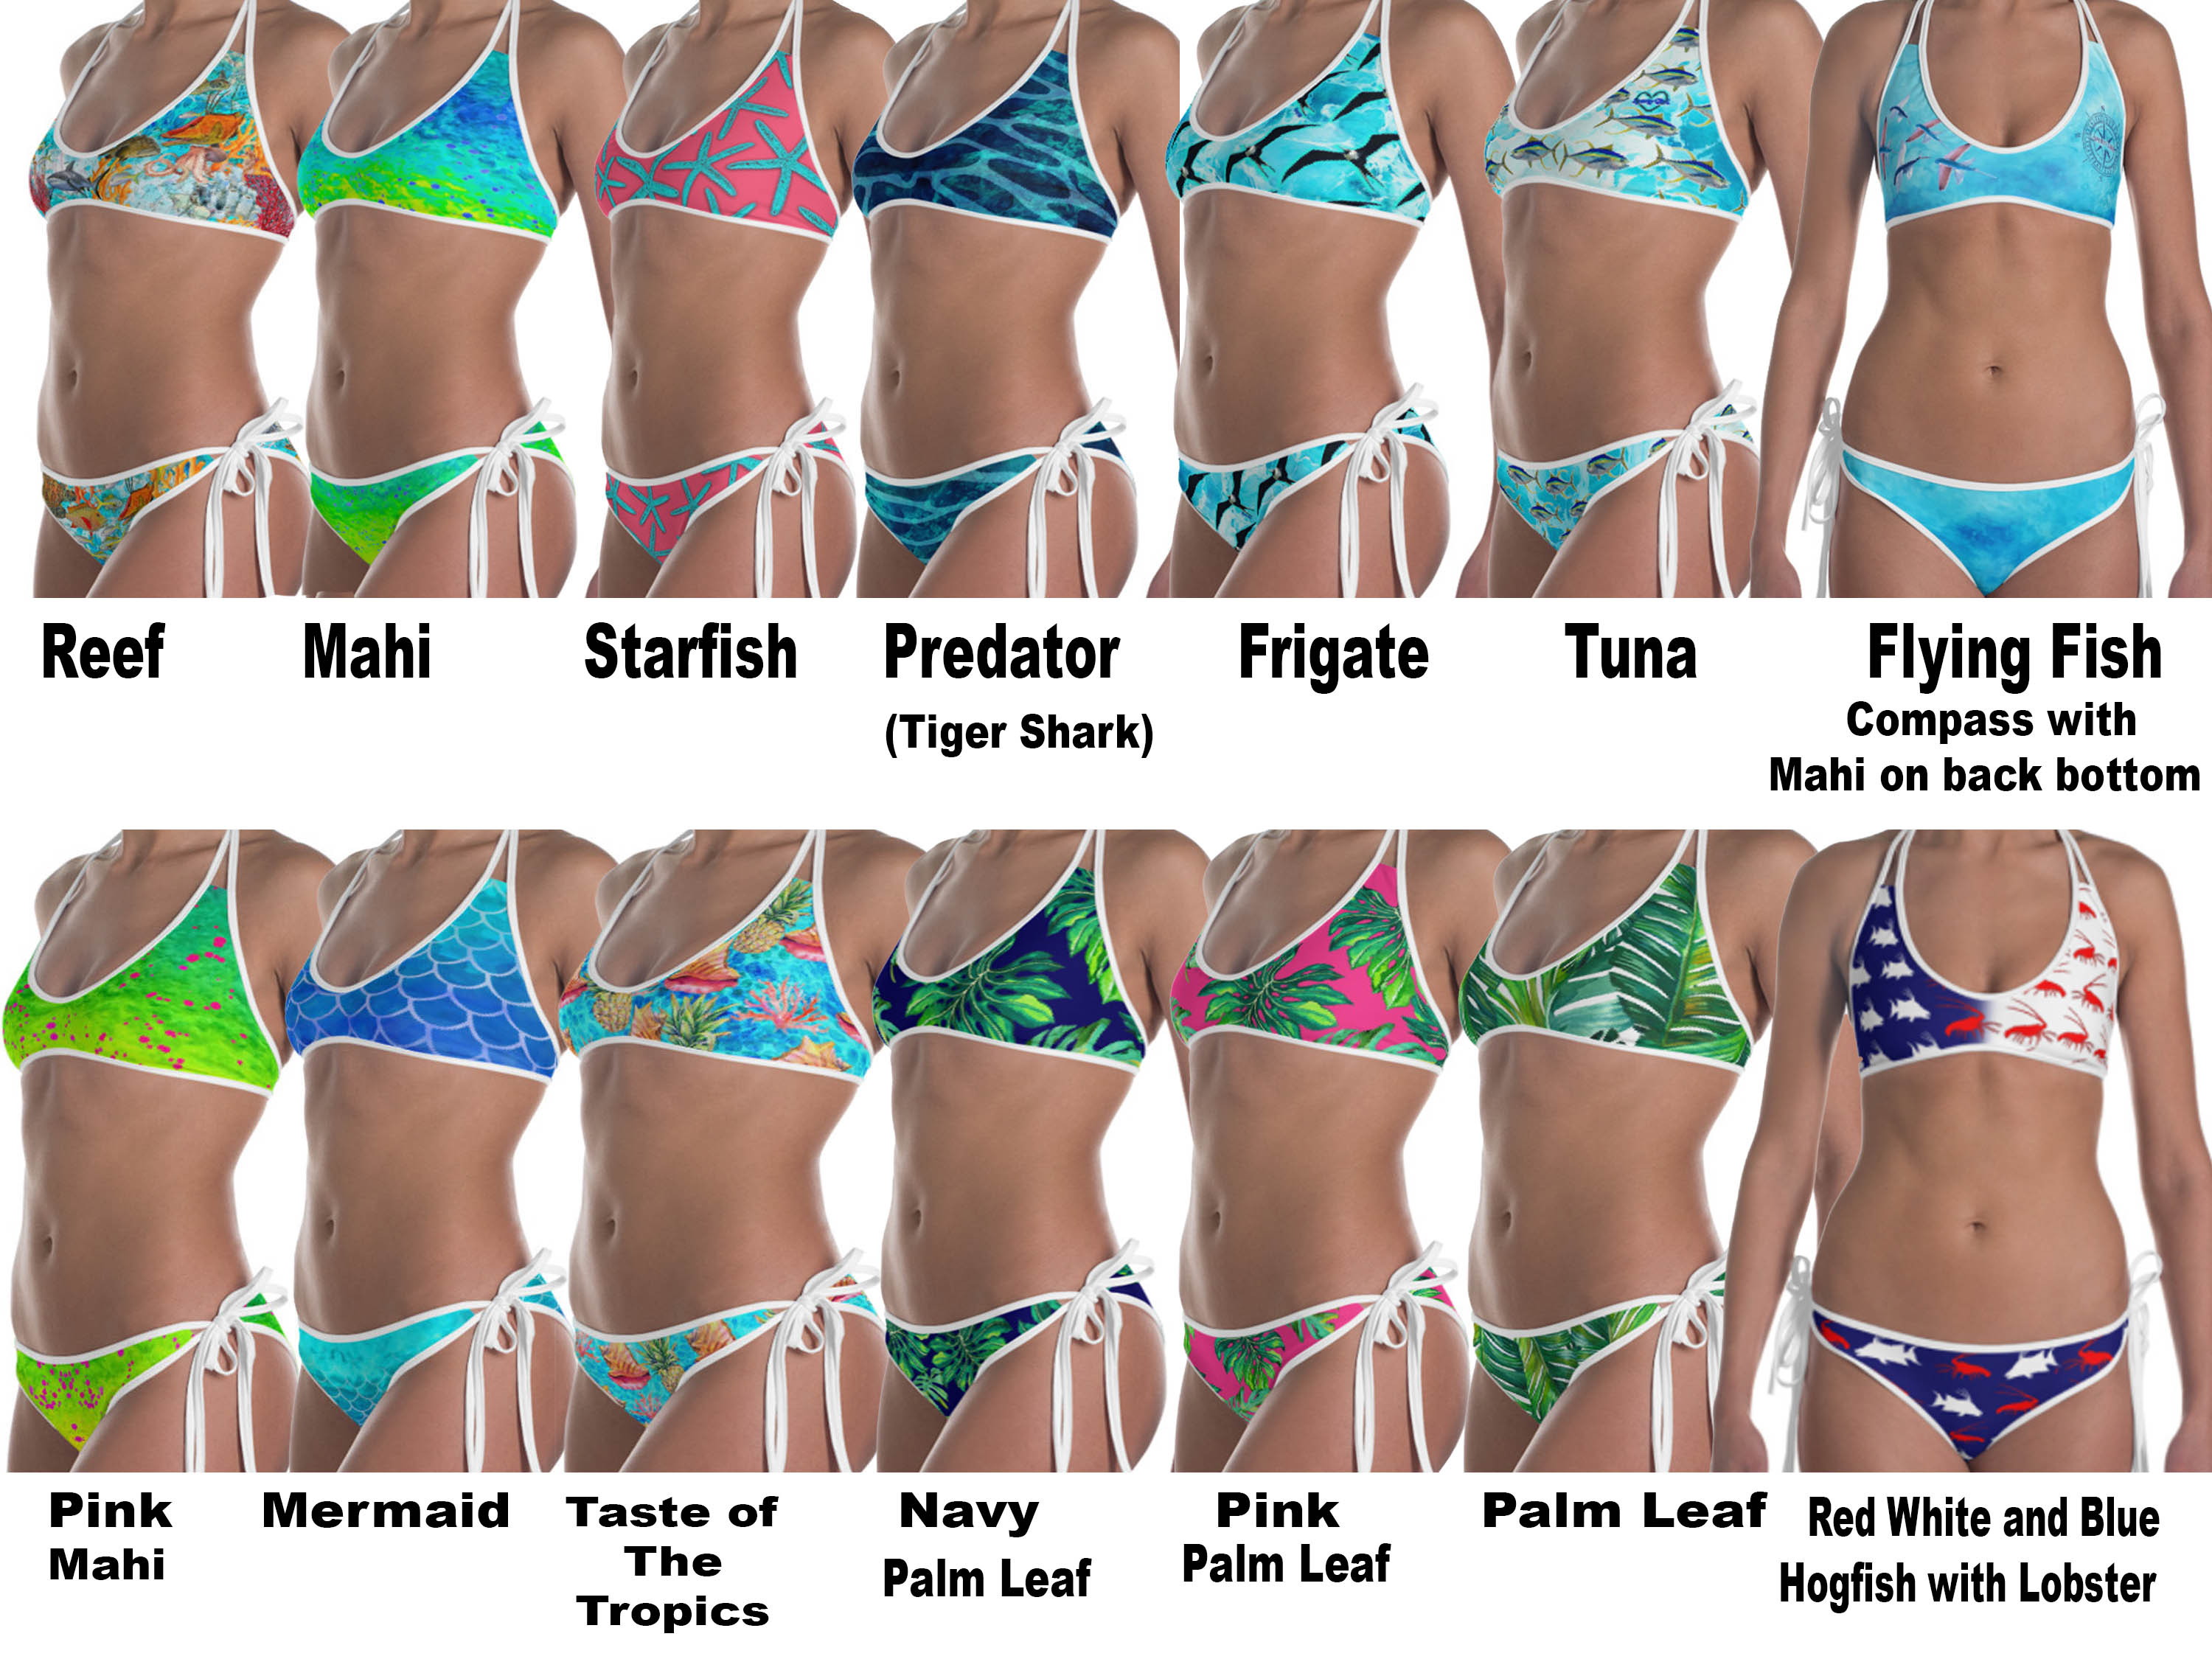 reversible-bikini-guide-fishing-bikinis-tropical-bikinis-florida-keys-bahamas-vacation-jupiter-fl-.jpg